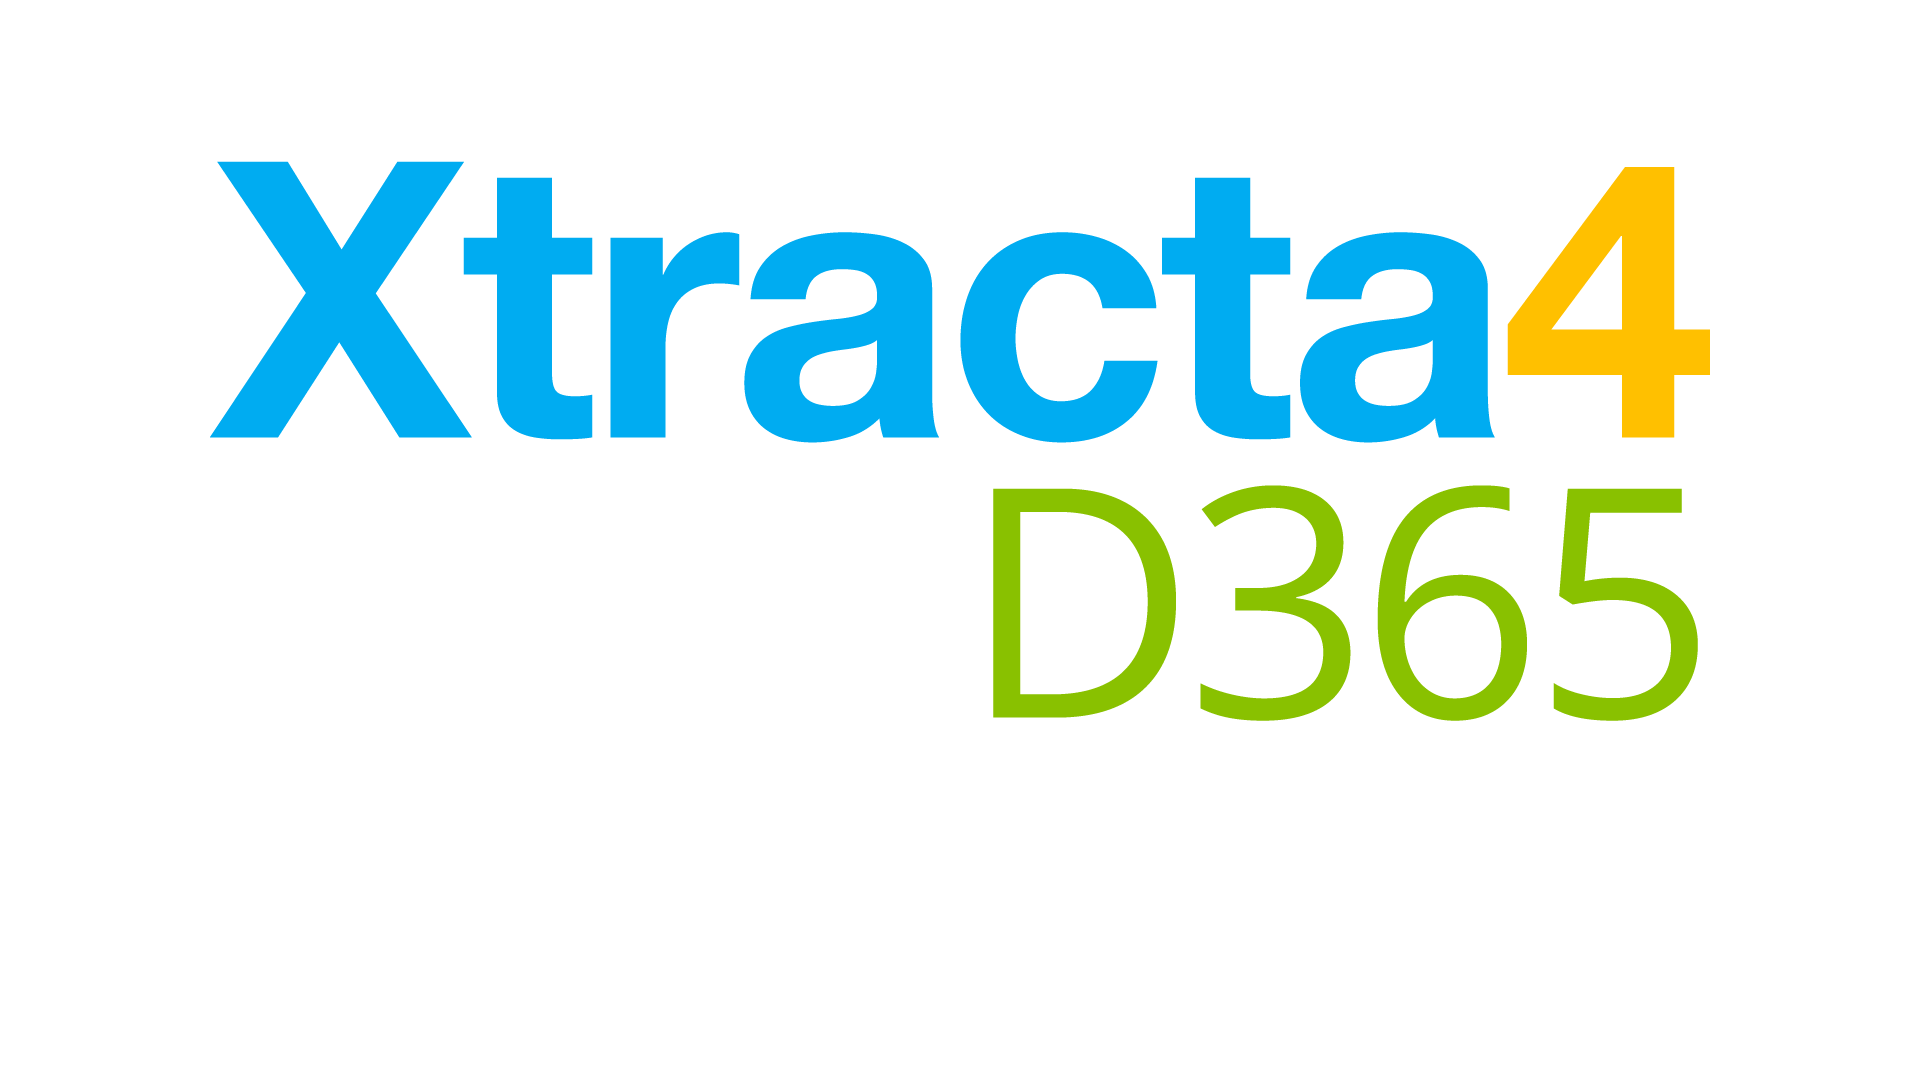 Xtracta4 logos-01